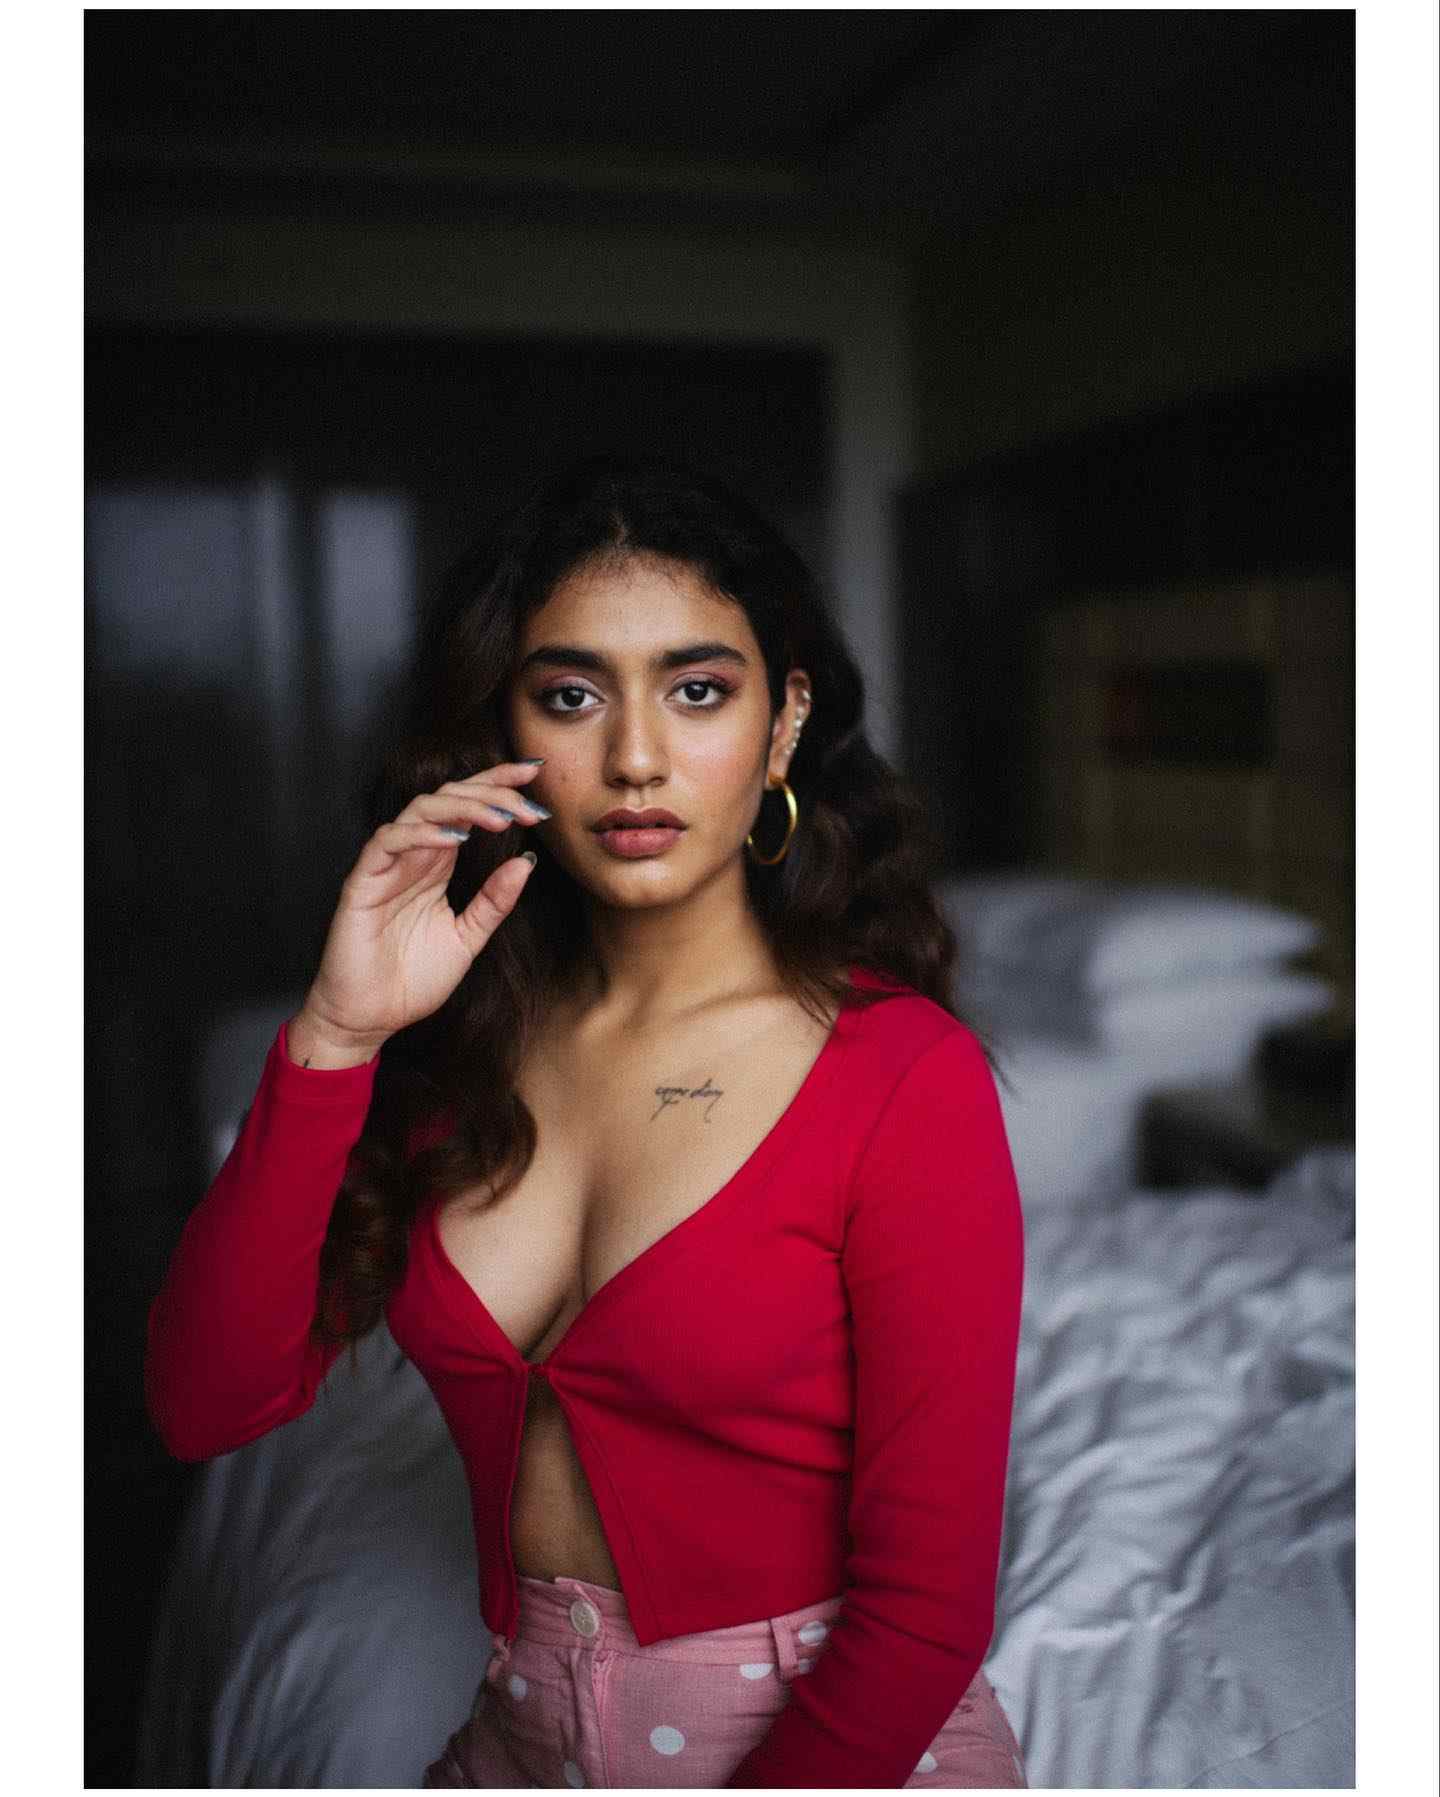 Priya Varrier stunning photos in red dress on bed